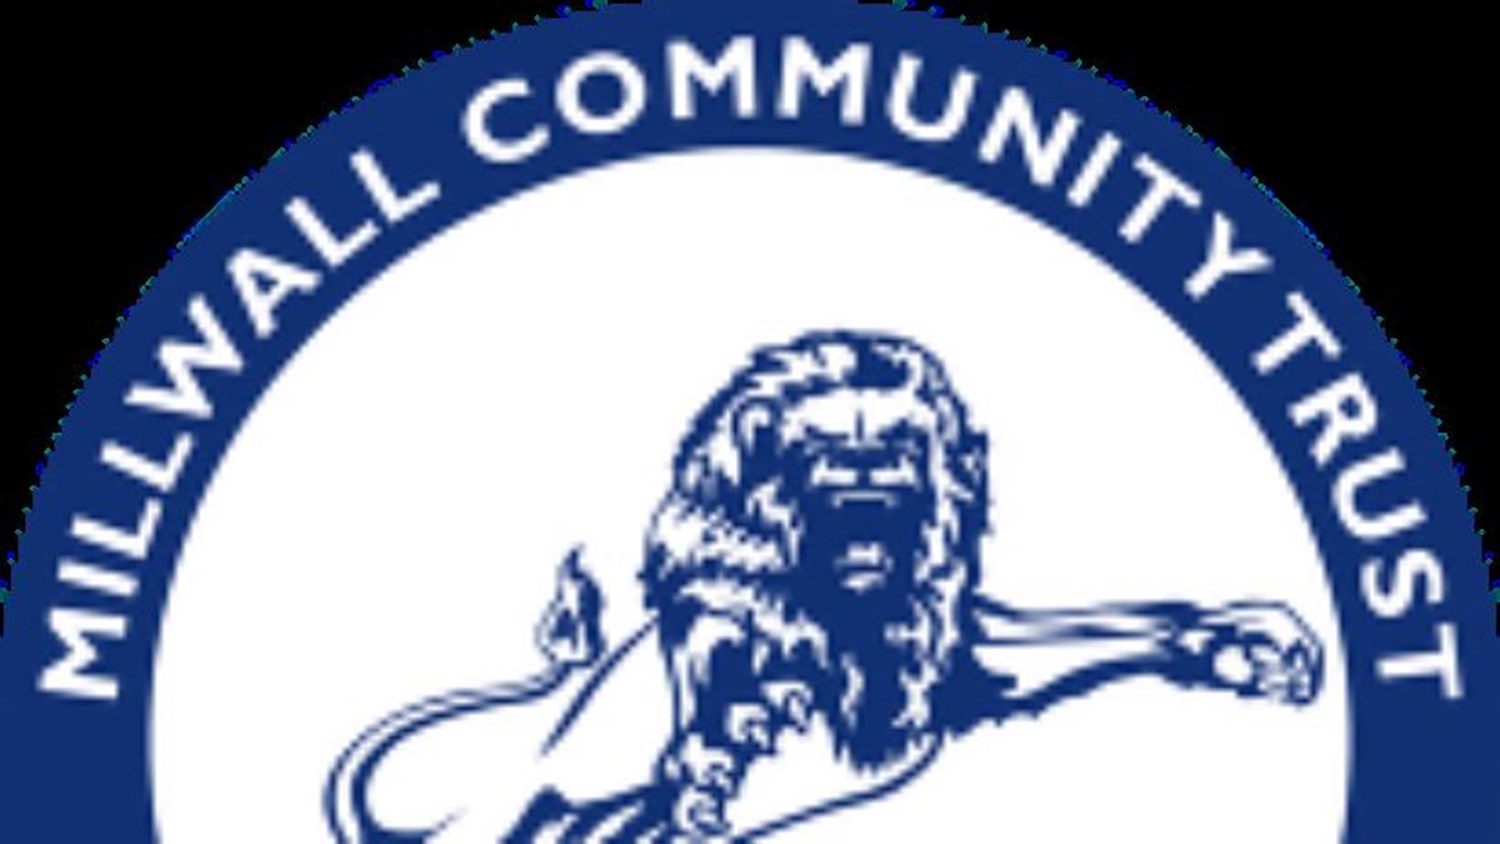 Millwall Community Trust